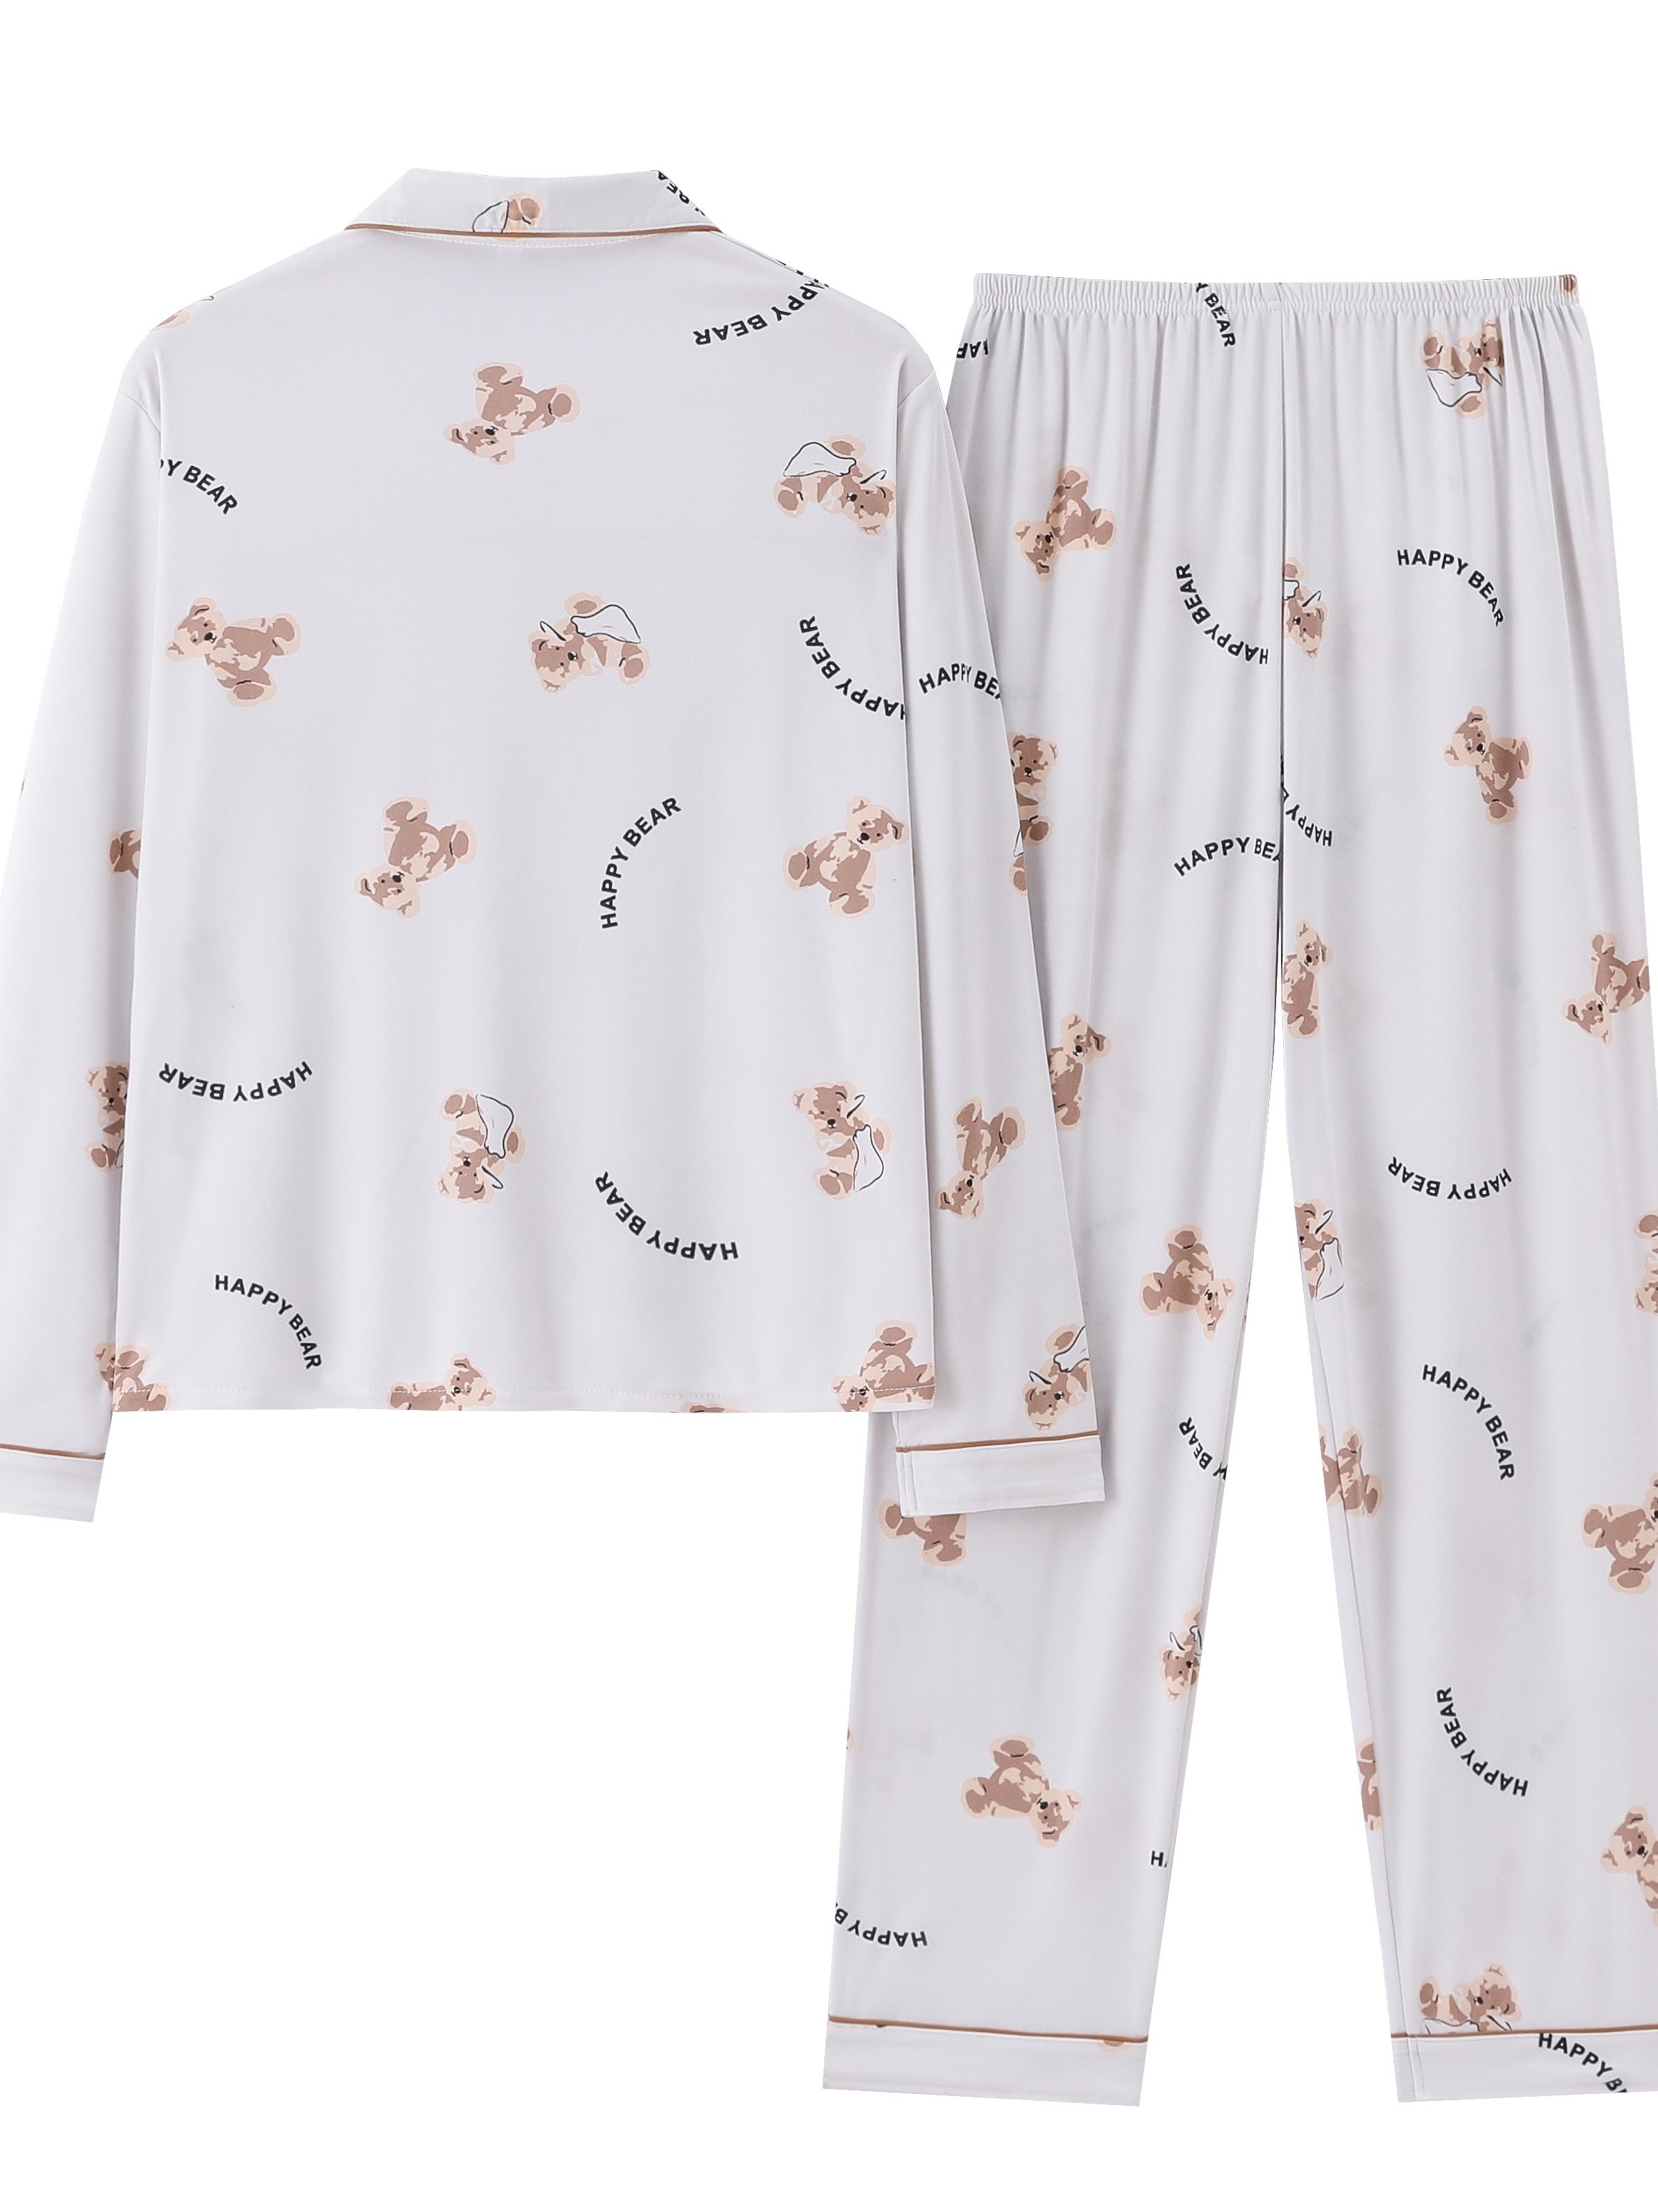 Women's Tall Leopard Print Oversized Pyjama Set